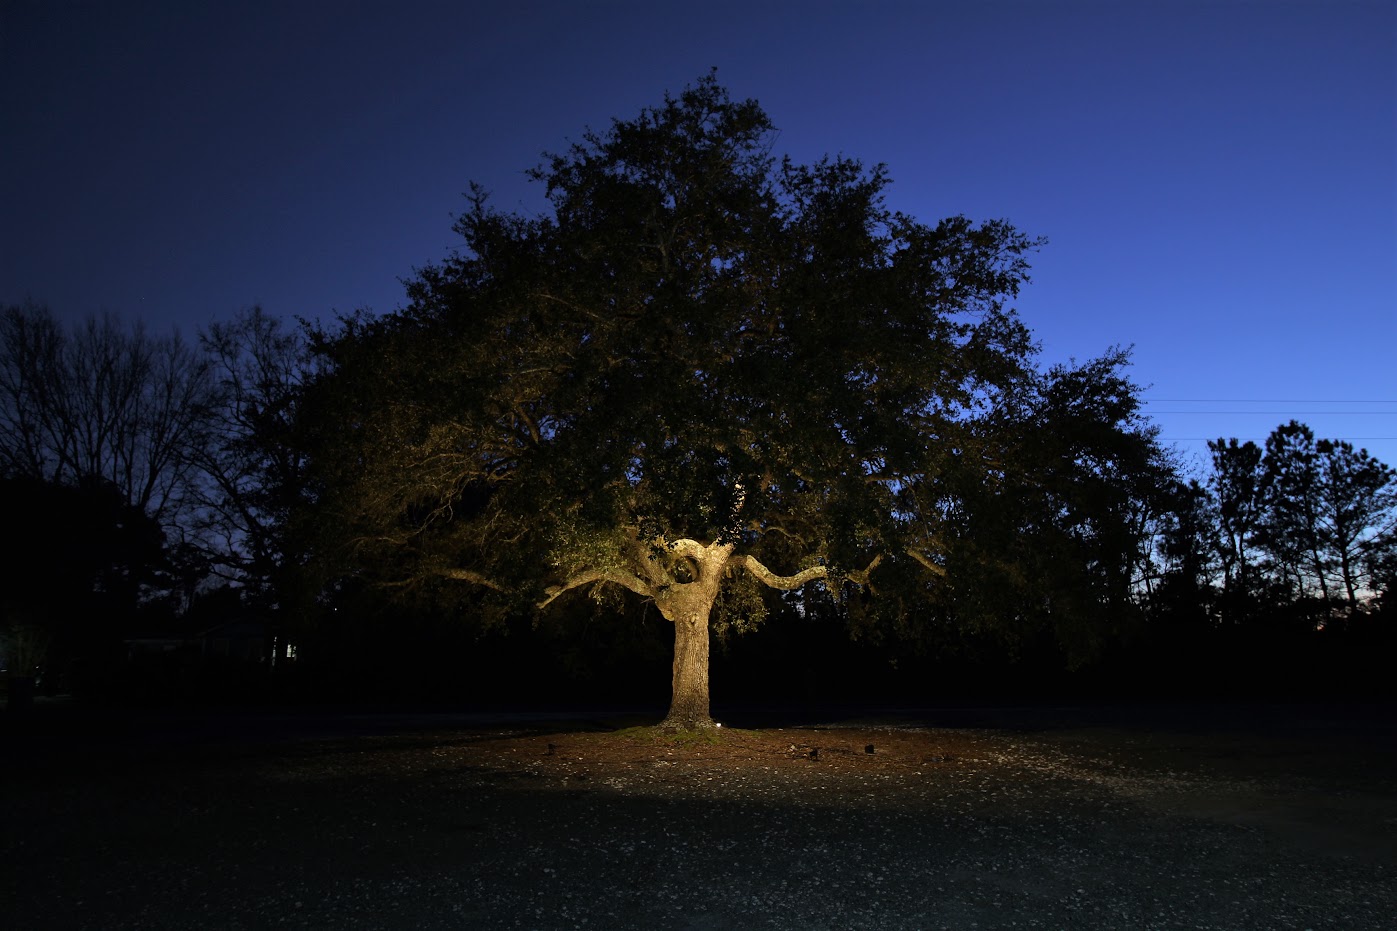 landscape lighting installation for a tree